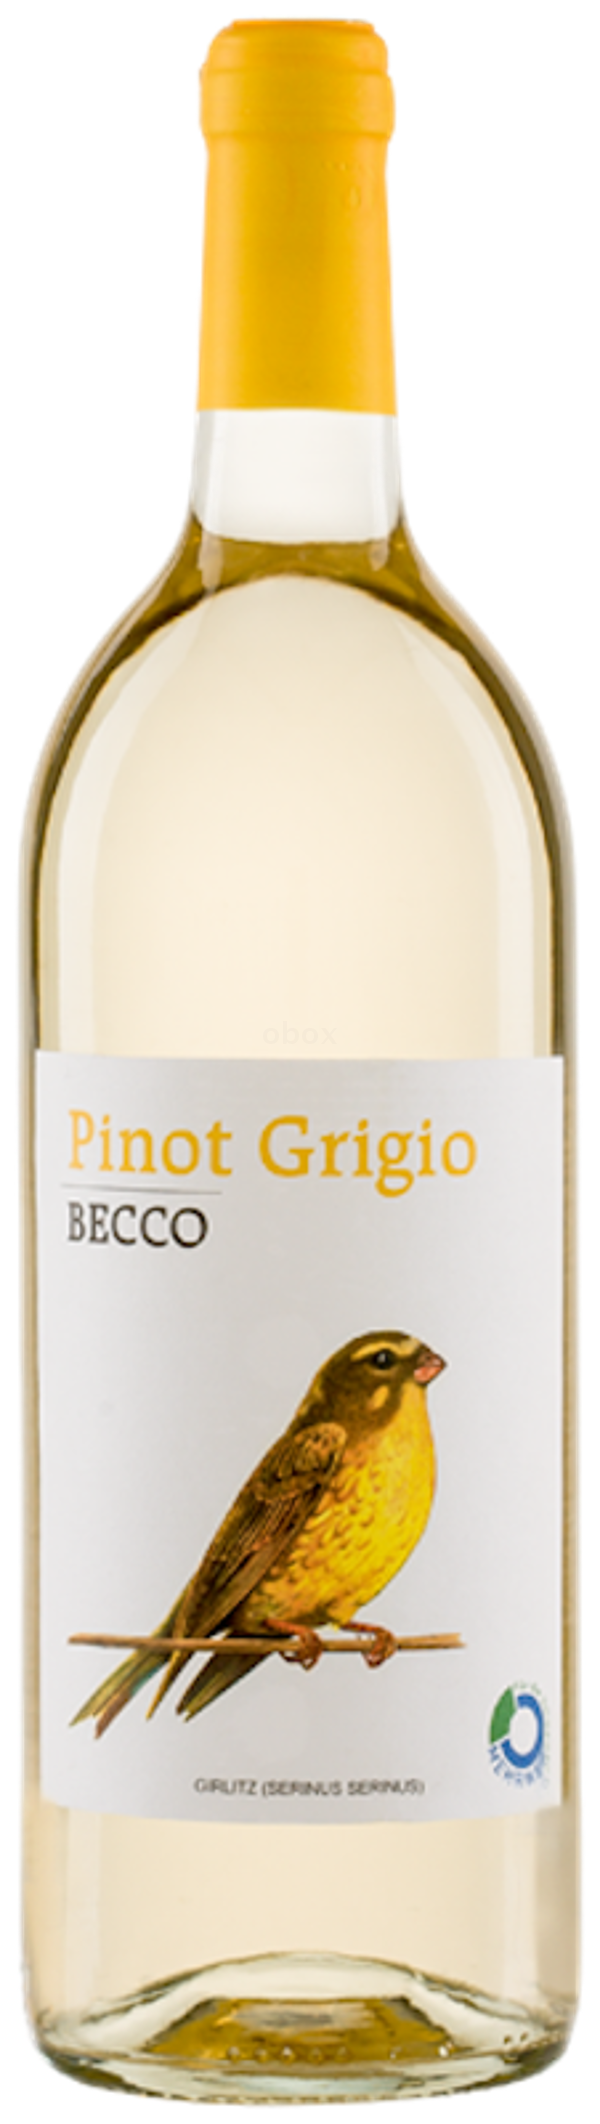 Produktfoto zu BECCO Pinot Grigio IGT 2022 1l